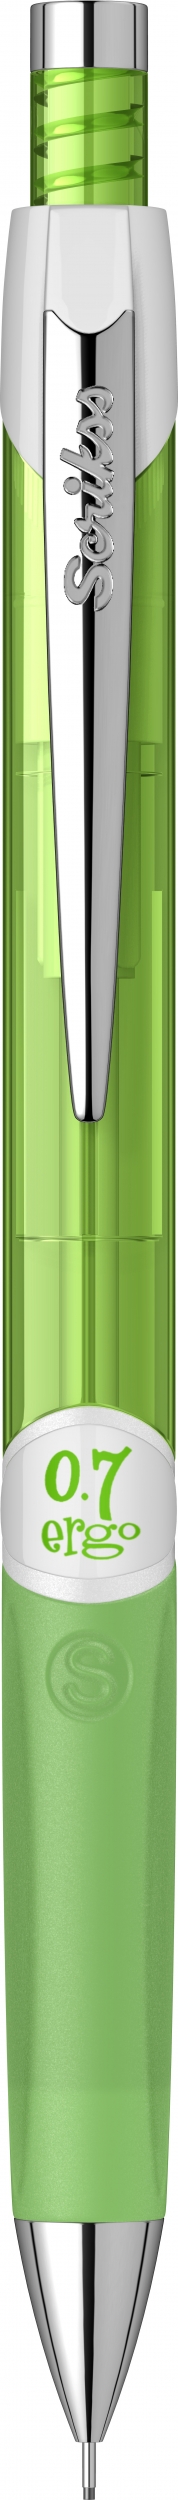 Механичен молив Ergo Scrikss 0,7мм., модел 72186, , Неон Зелен